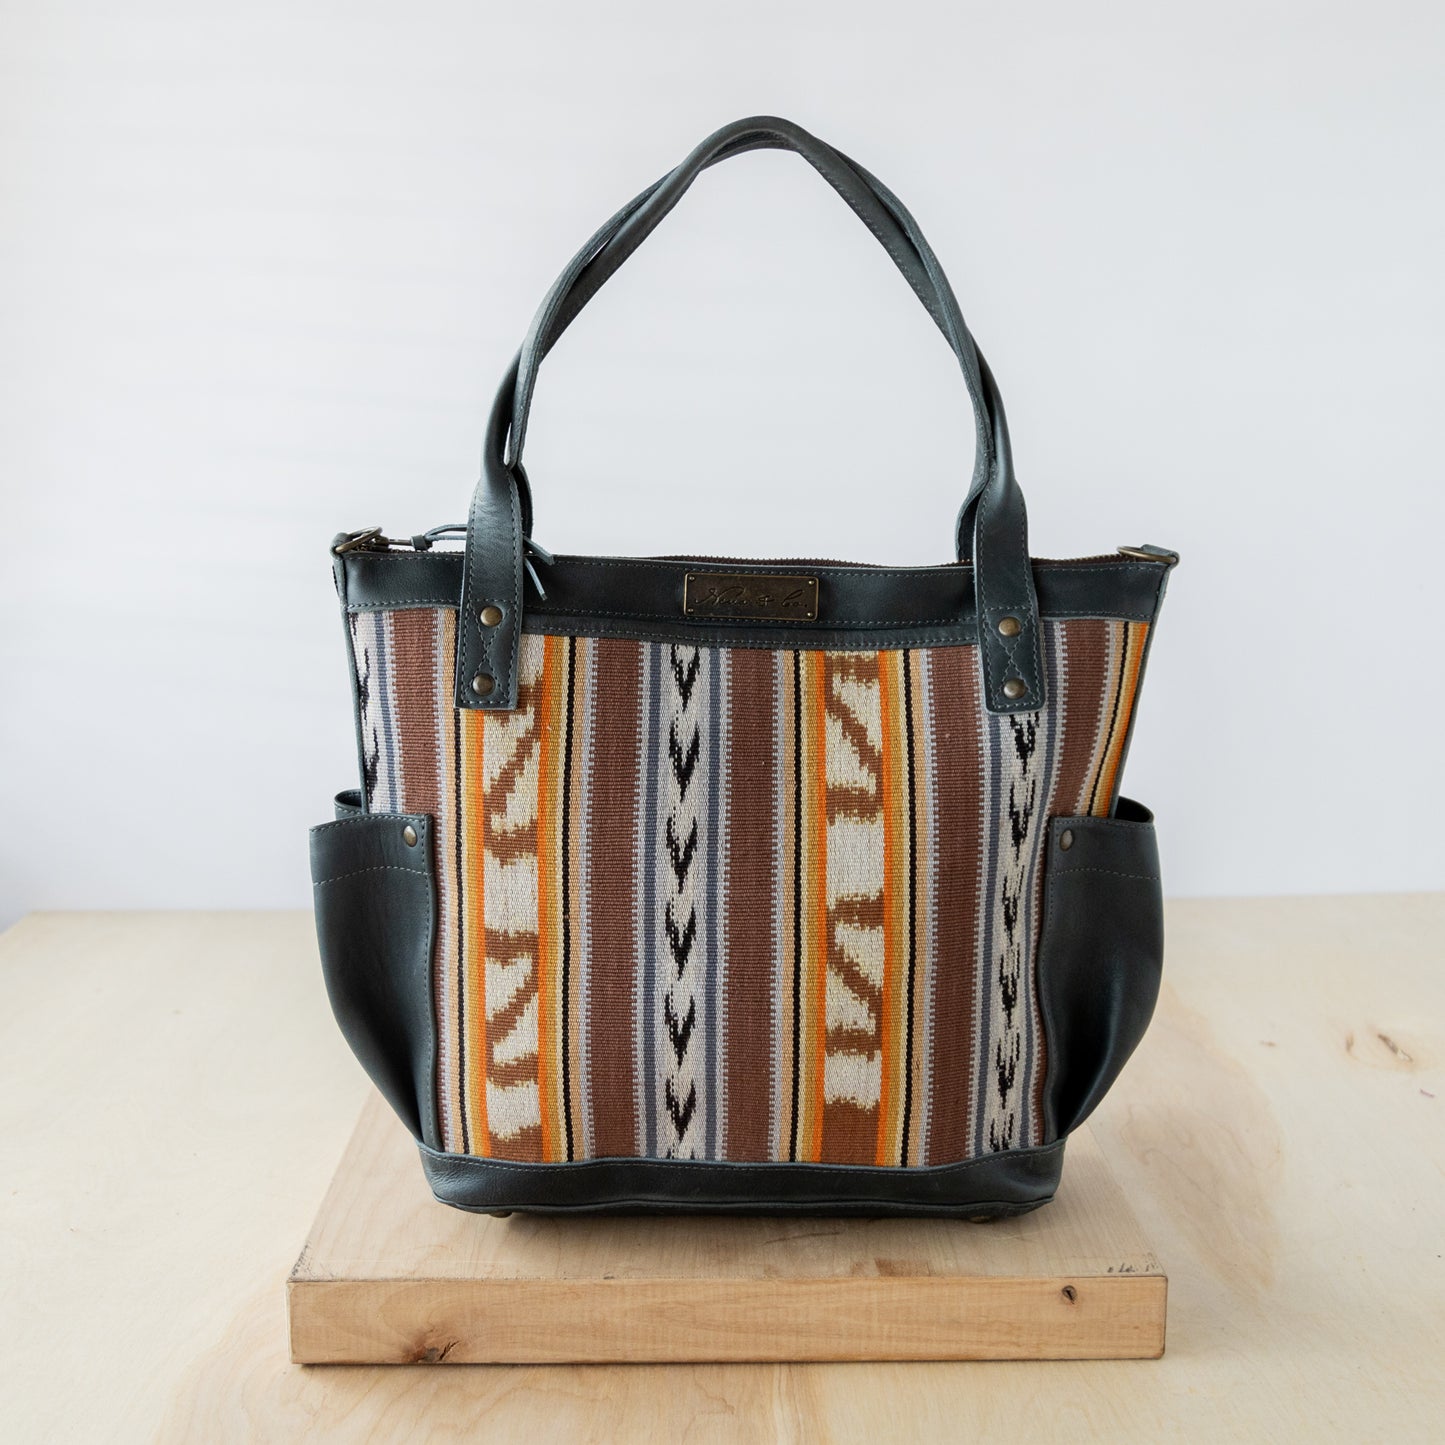 Style&co. Bags & Handbags for Women for sale | eBay